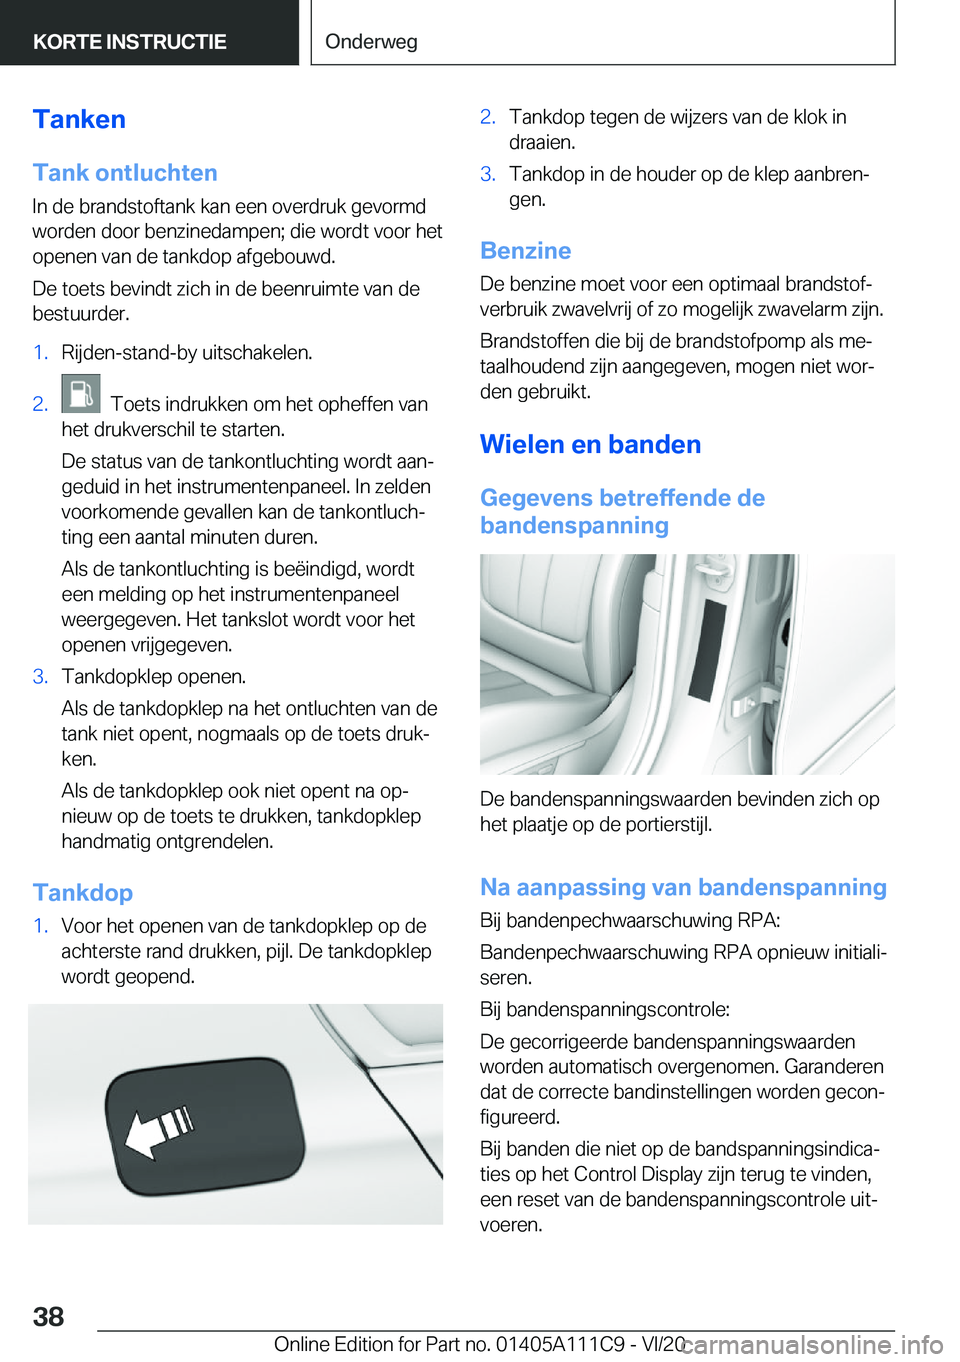 BMW 3 SERIES SEDAN PLUG-IN HYBRID 2021  Instructieboekjes (in Dutch) �T�a�n�k�e�n�T�a�n�k��o�n�t�l�u�c�h�t�e�n
�I�n��d�e��b�r�a�n�d�s�t�o�f�t�a�n�k��k�a�n��e�e�n��o�v�e�r�d�r�u�k��g�e�v�o�r�m�d
�w�o�r�d�e�n��d�o�o�r��b�e�n�z�i�n�e�d�a�m�p�e�n�;��d�i�e��w�o�r